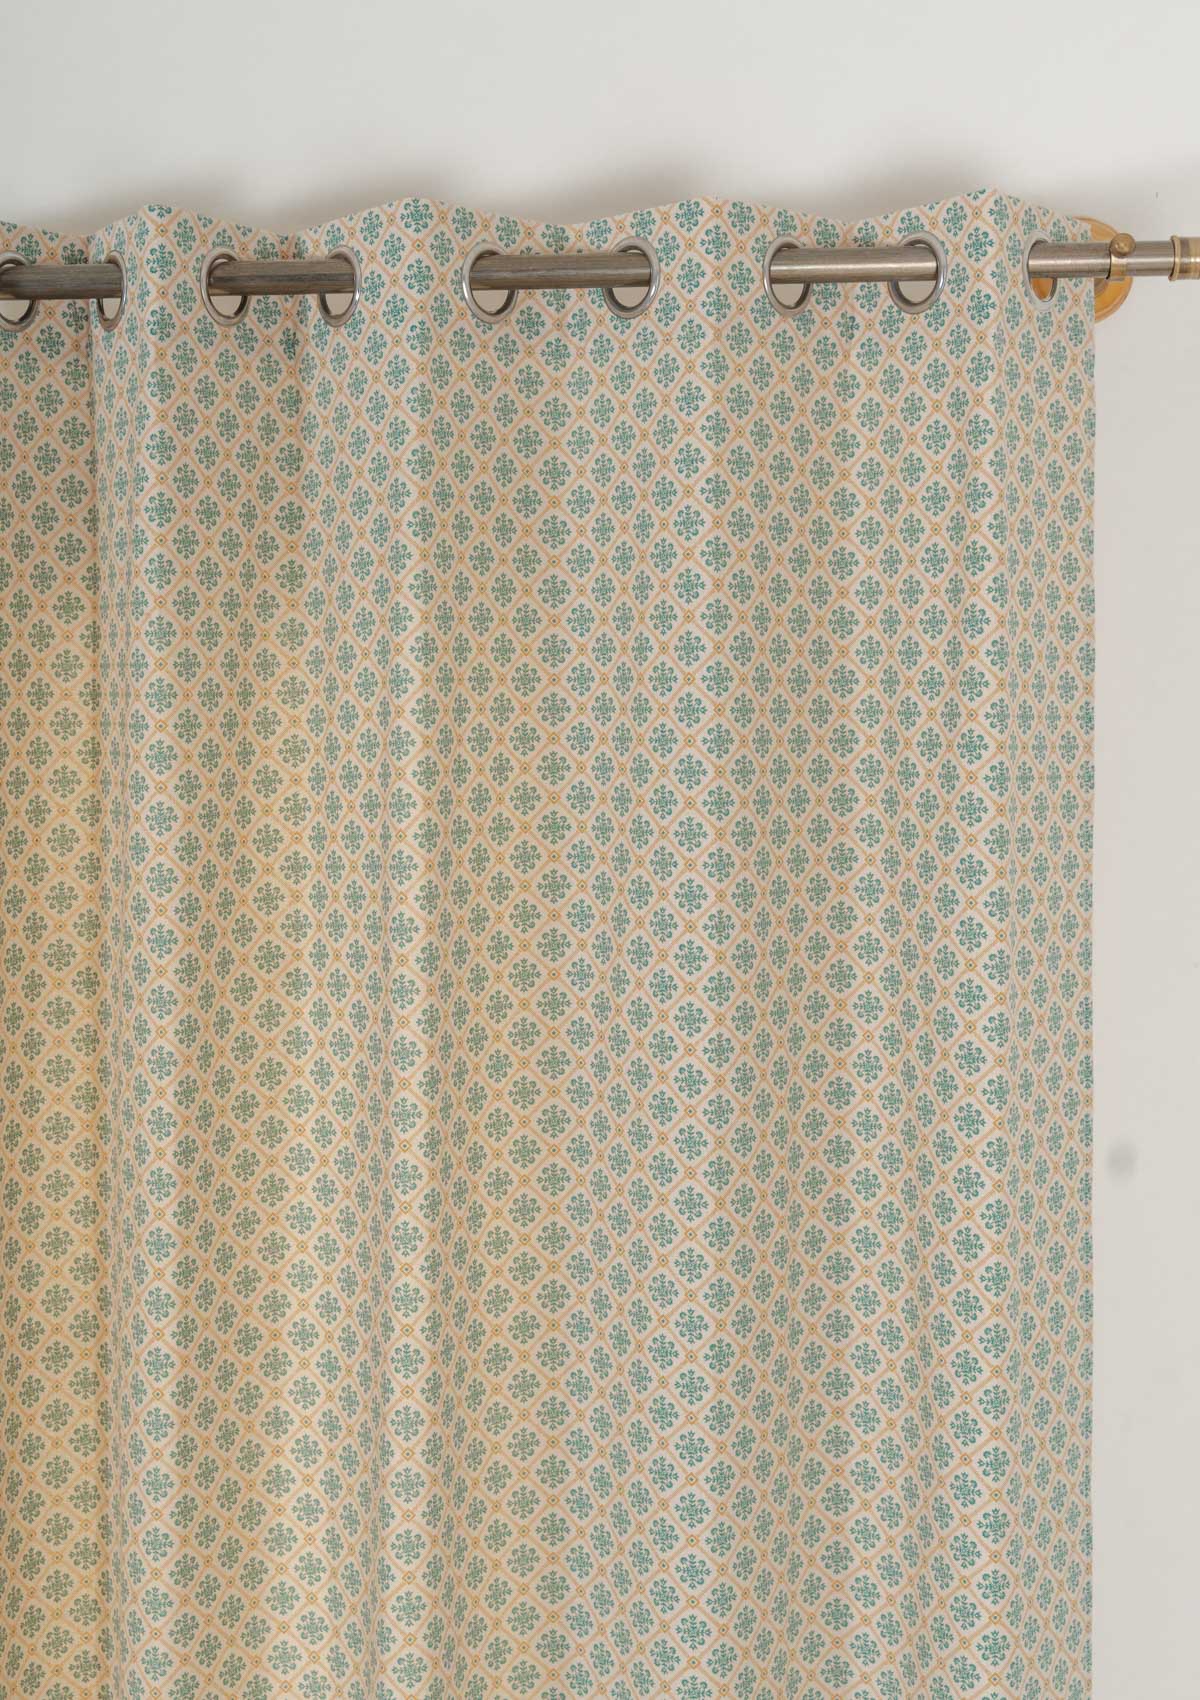 Yura 100% cotton geometric curtain for living room - Room darkening - Aqua blue - Single - Pack of 1